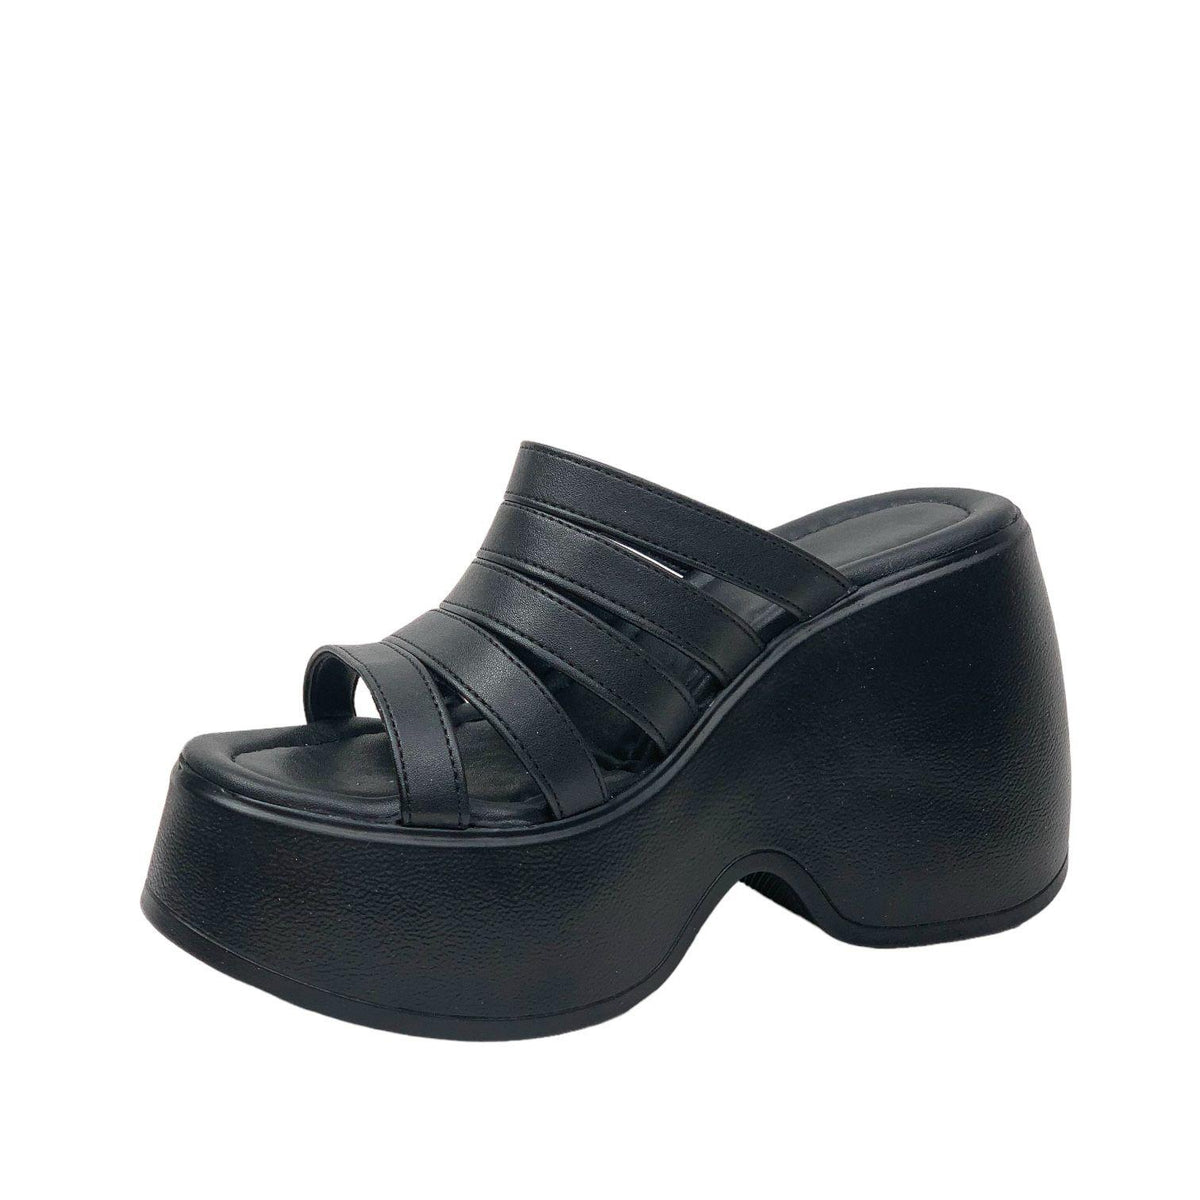 Women's Gehm Black Banded High Heel Platform Sandals 10 Cm DLG11 - STREETMODE ™